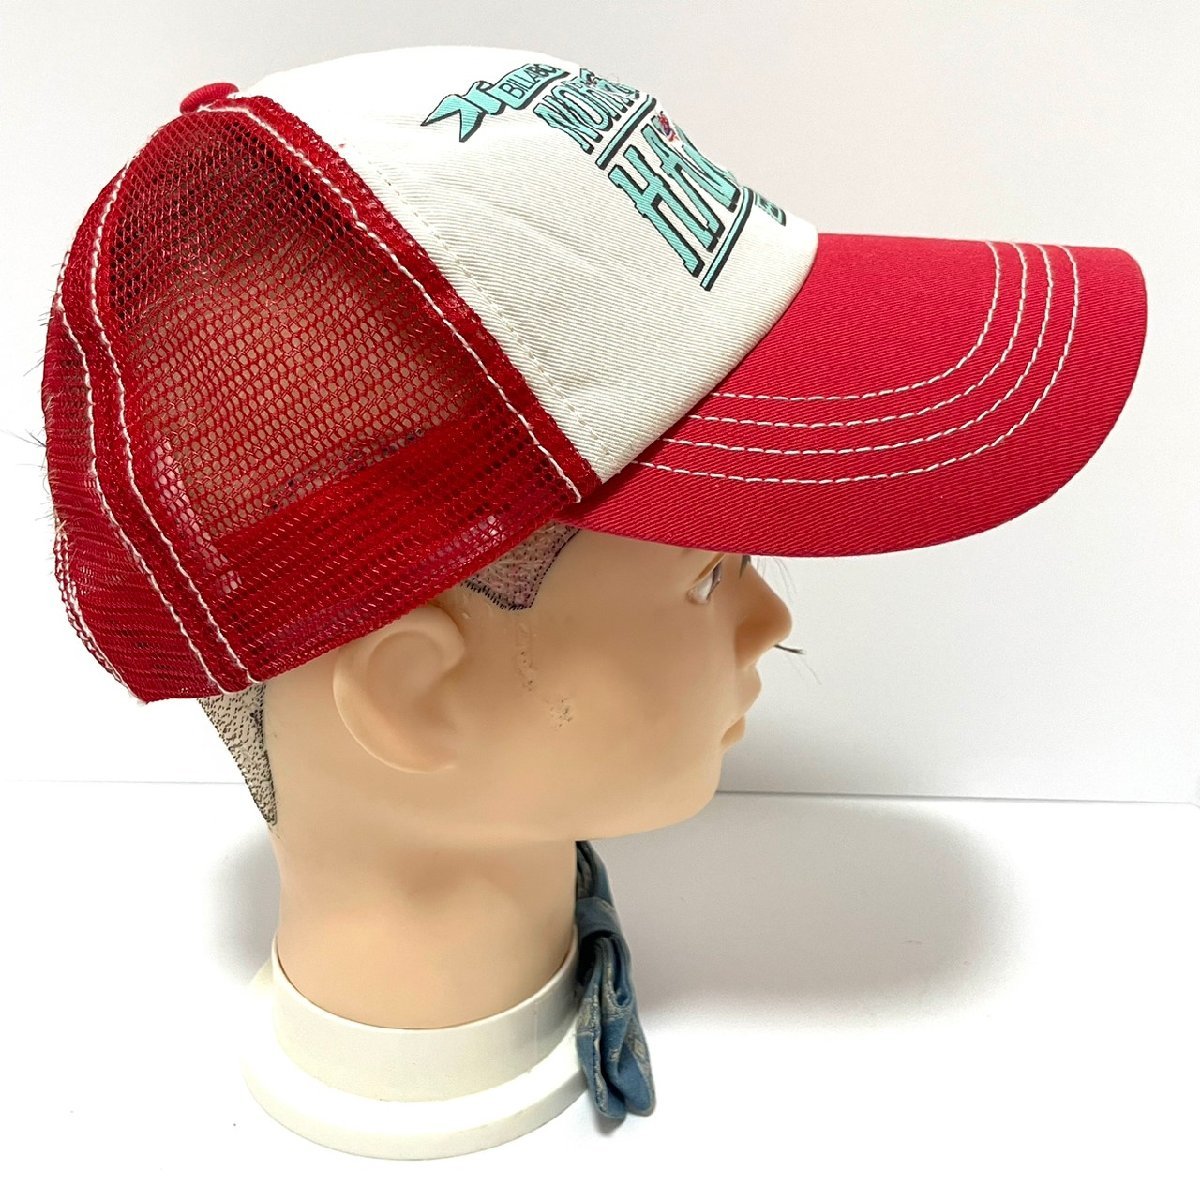 (^w^)b Billabong половина сетчатая кепка шляпа красный BILLABONG NORTH SHORE HAWAII PIPE MASTERS серфинг CAP OEN SIZE C0472EE